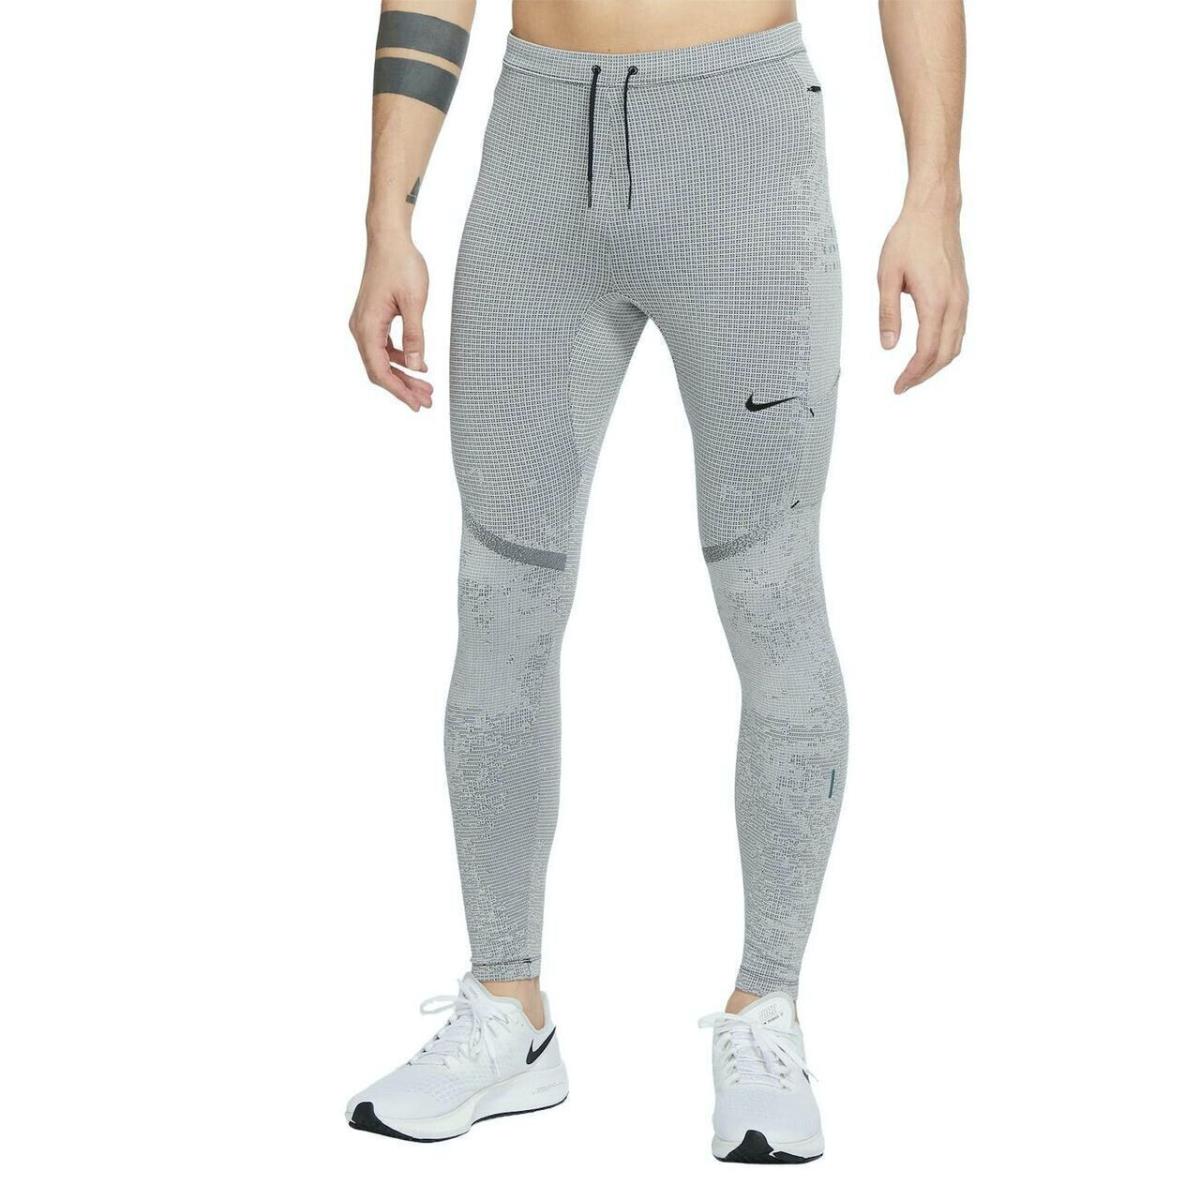 Nike Mens Therma-fit Adv Run Division Running Tight Pants Sz M DD9636 010